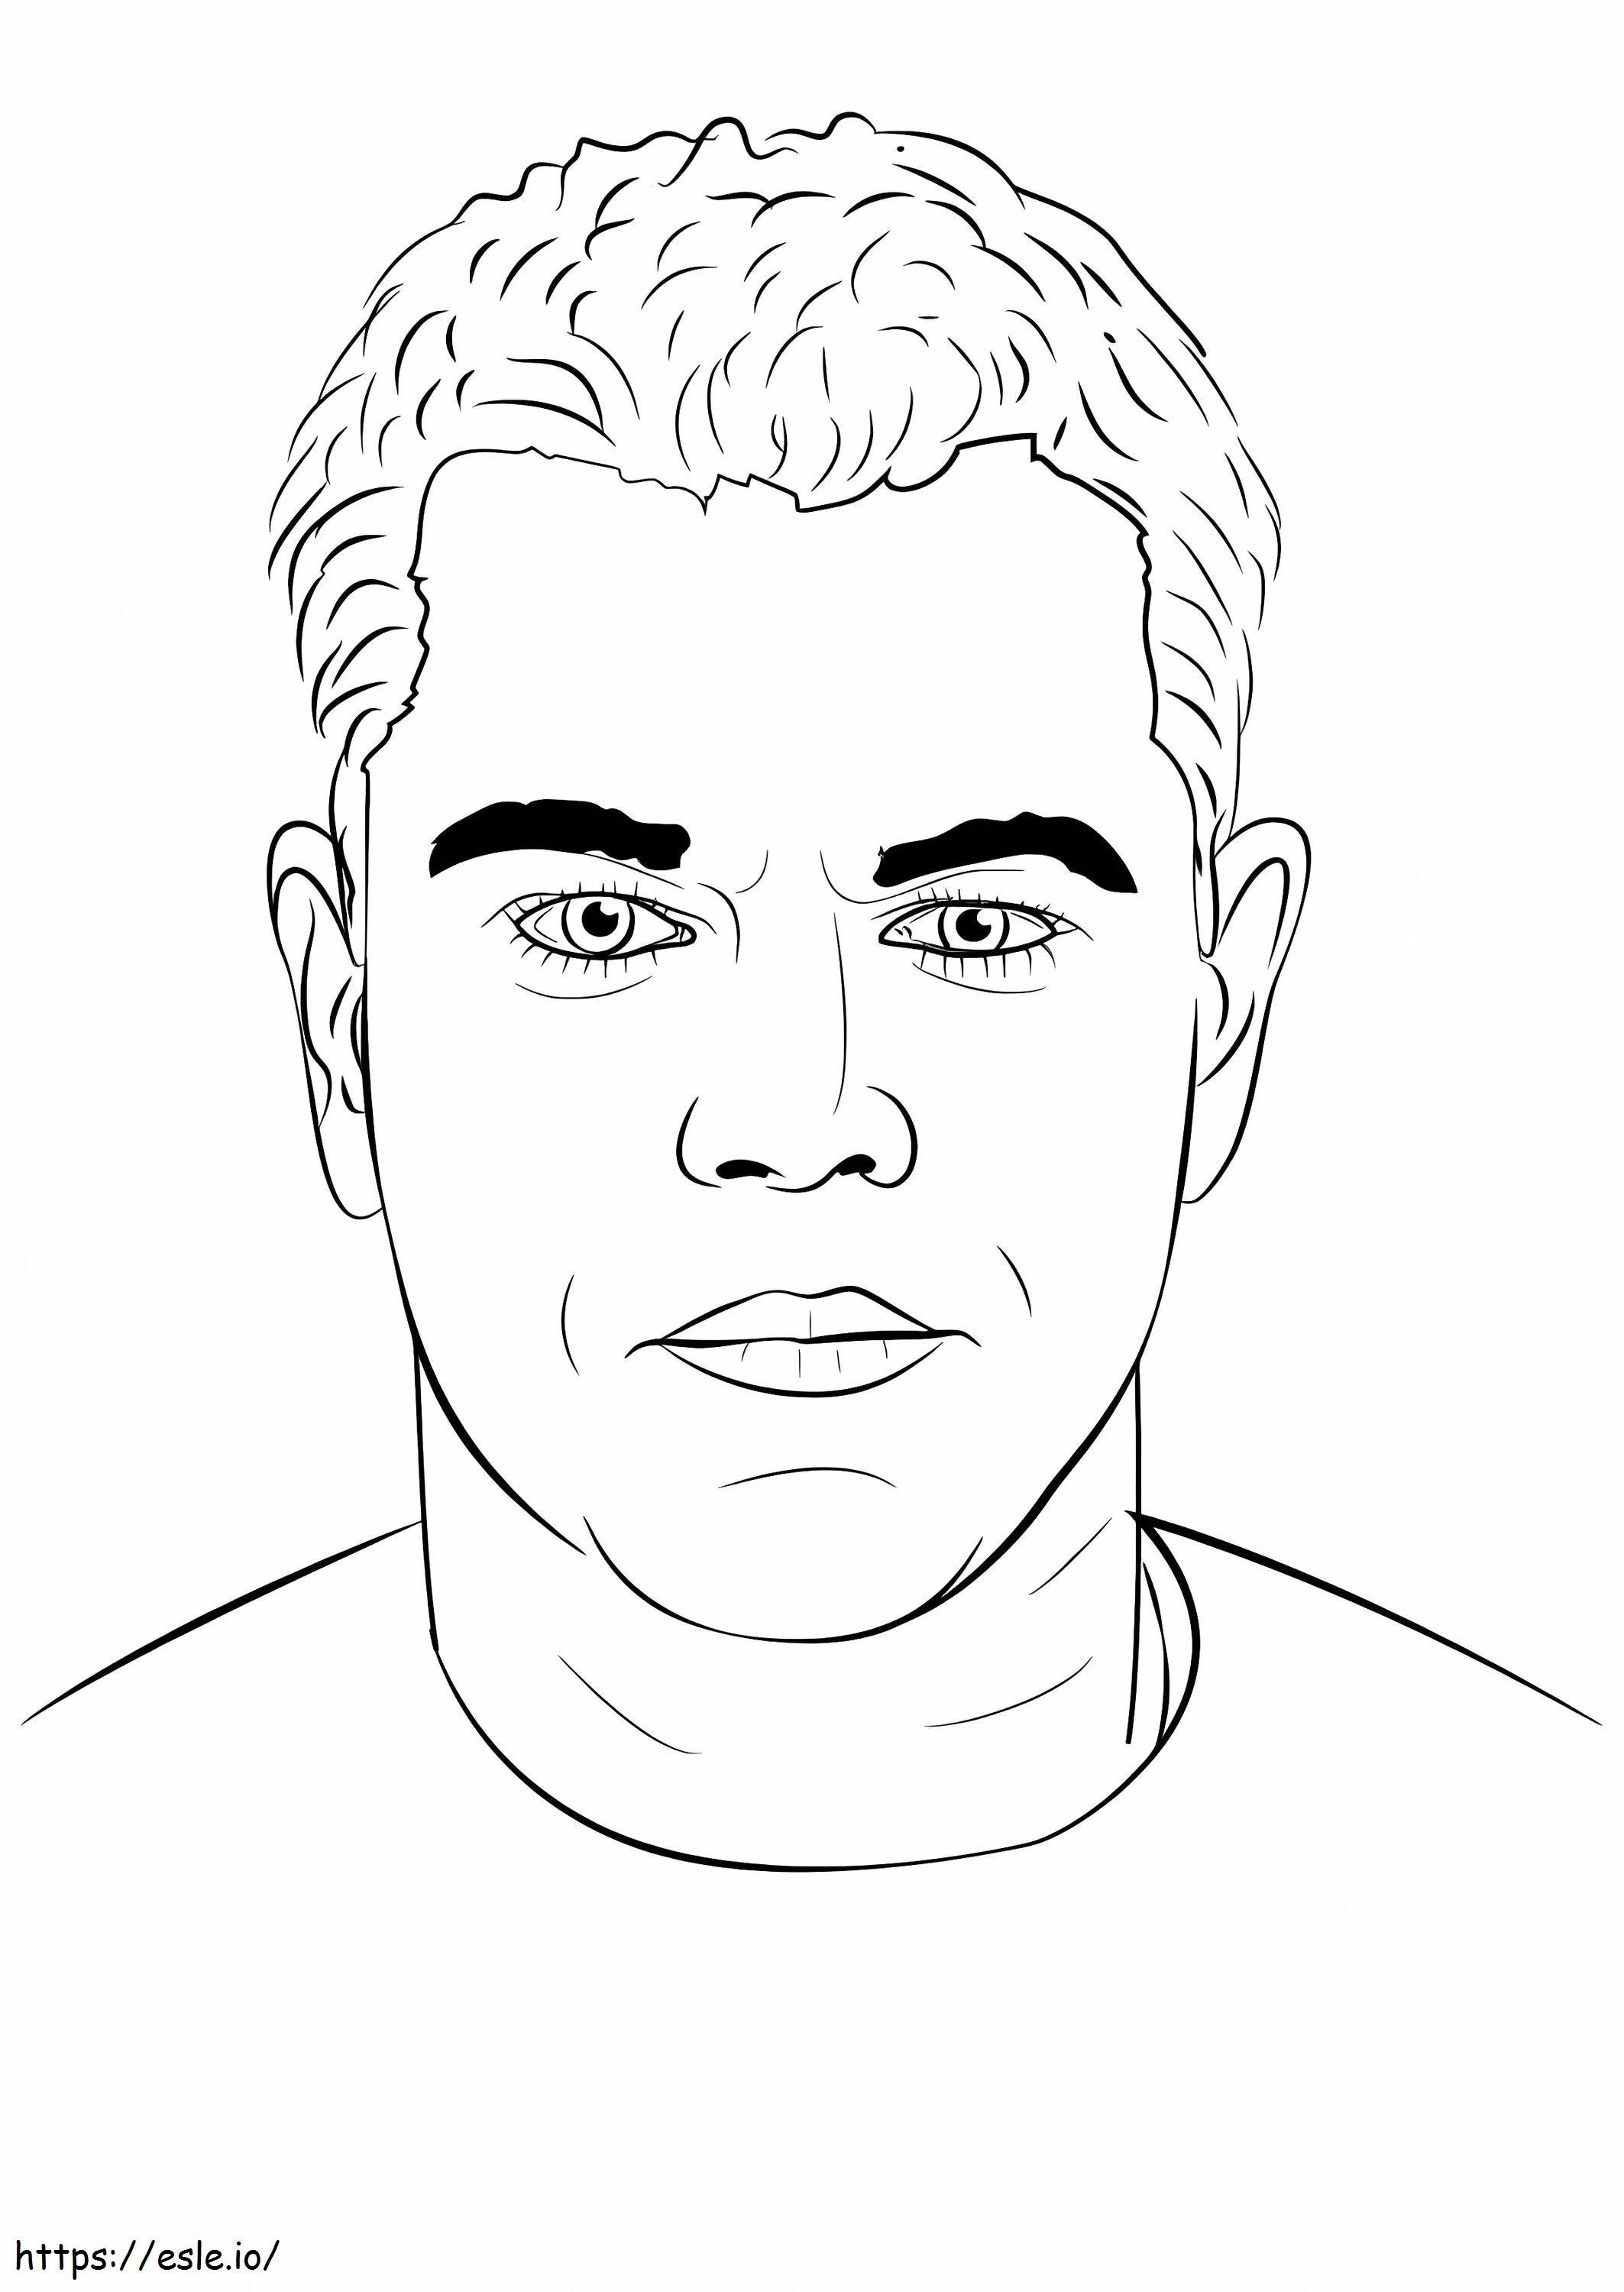 Matt Damon Face coloring page